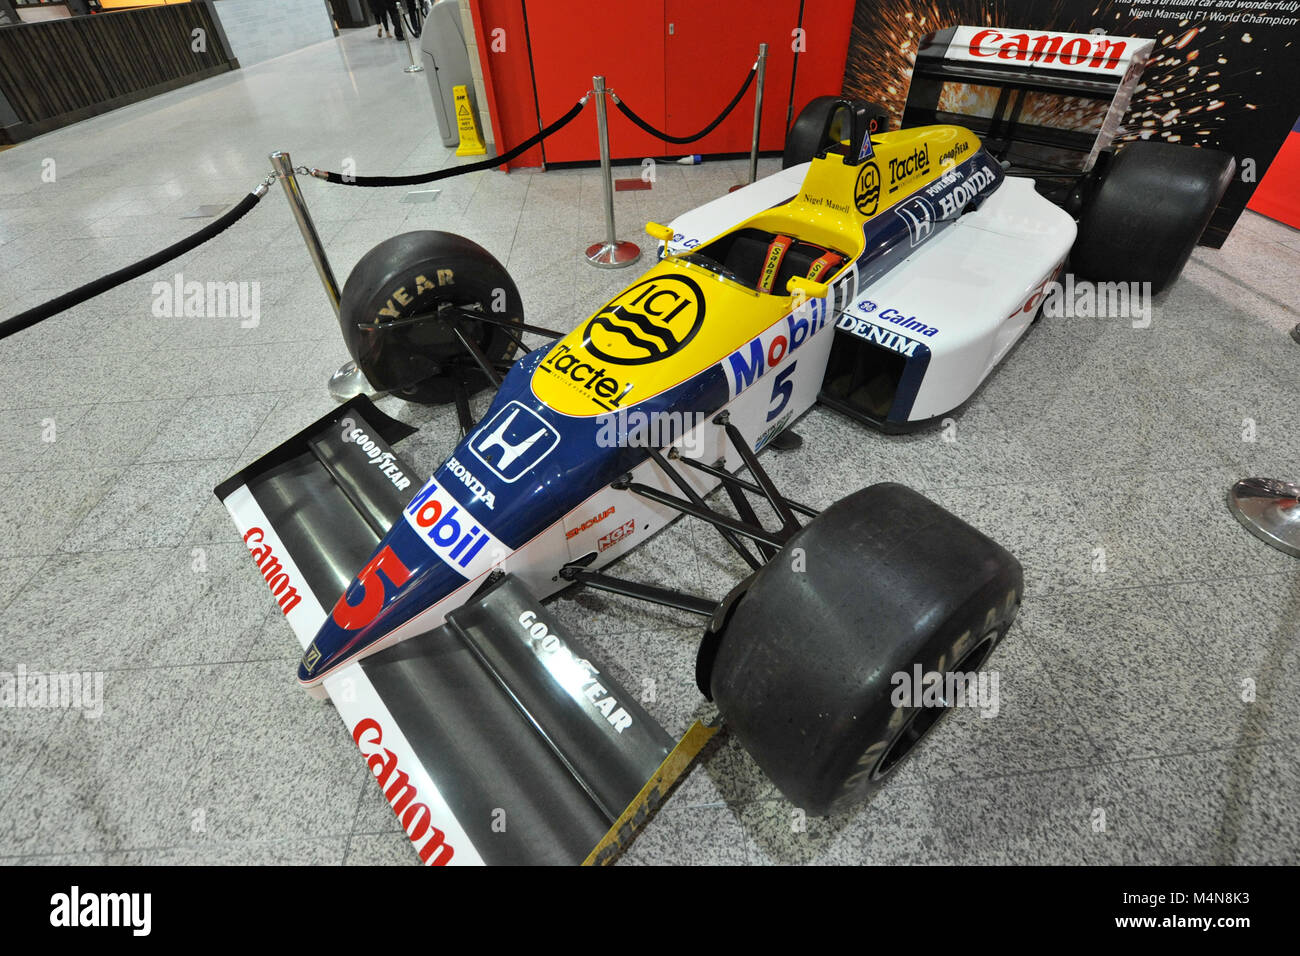 London Uk 16th Feb 18 A Williams Fw11 Formula One Racing Car As Stock Photo Alamy